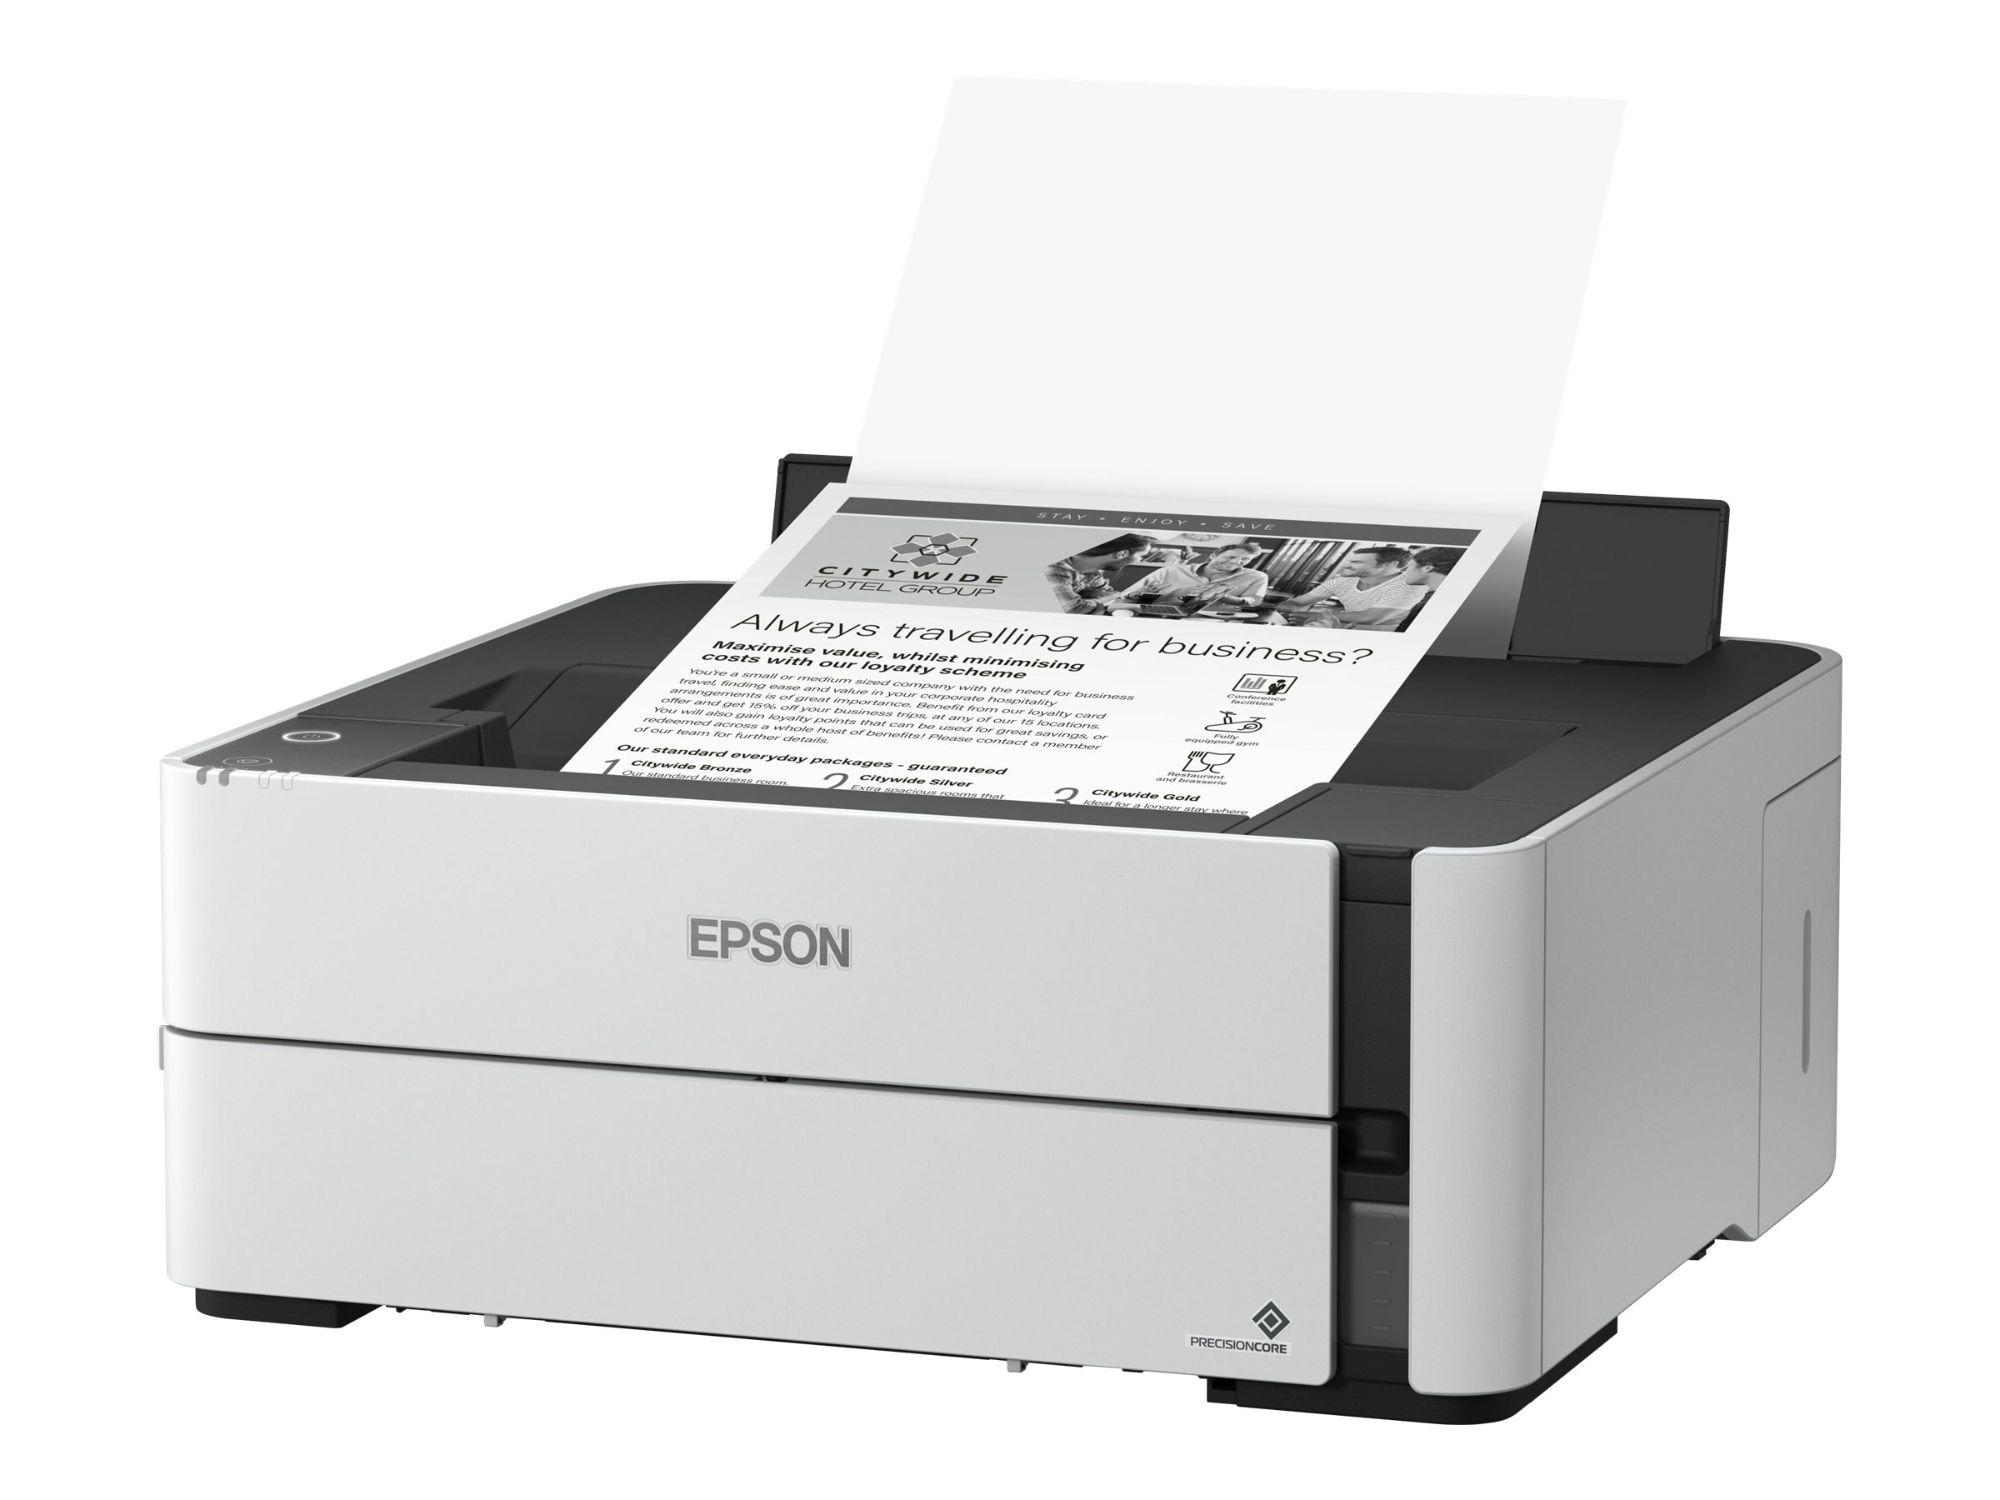 Epson Lx 300 pas cher - Achat neuf et occasion